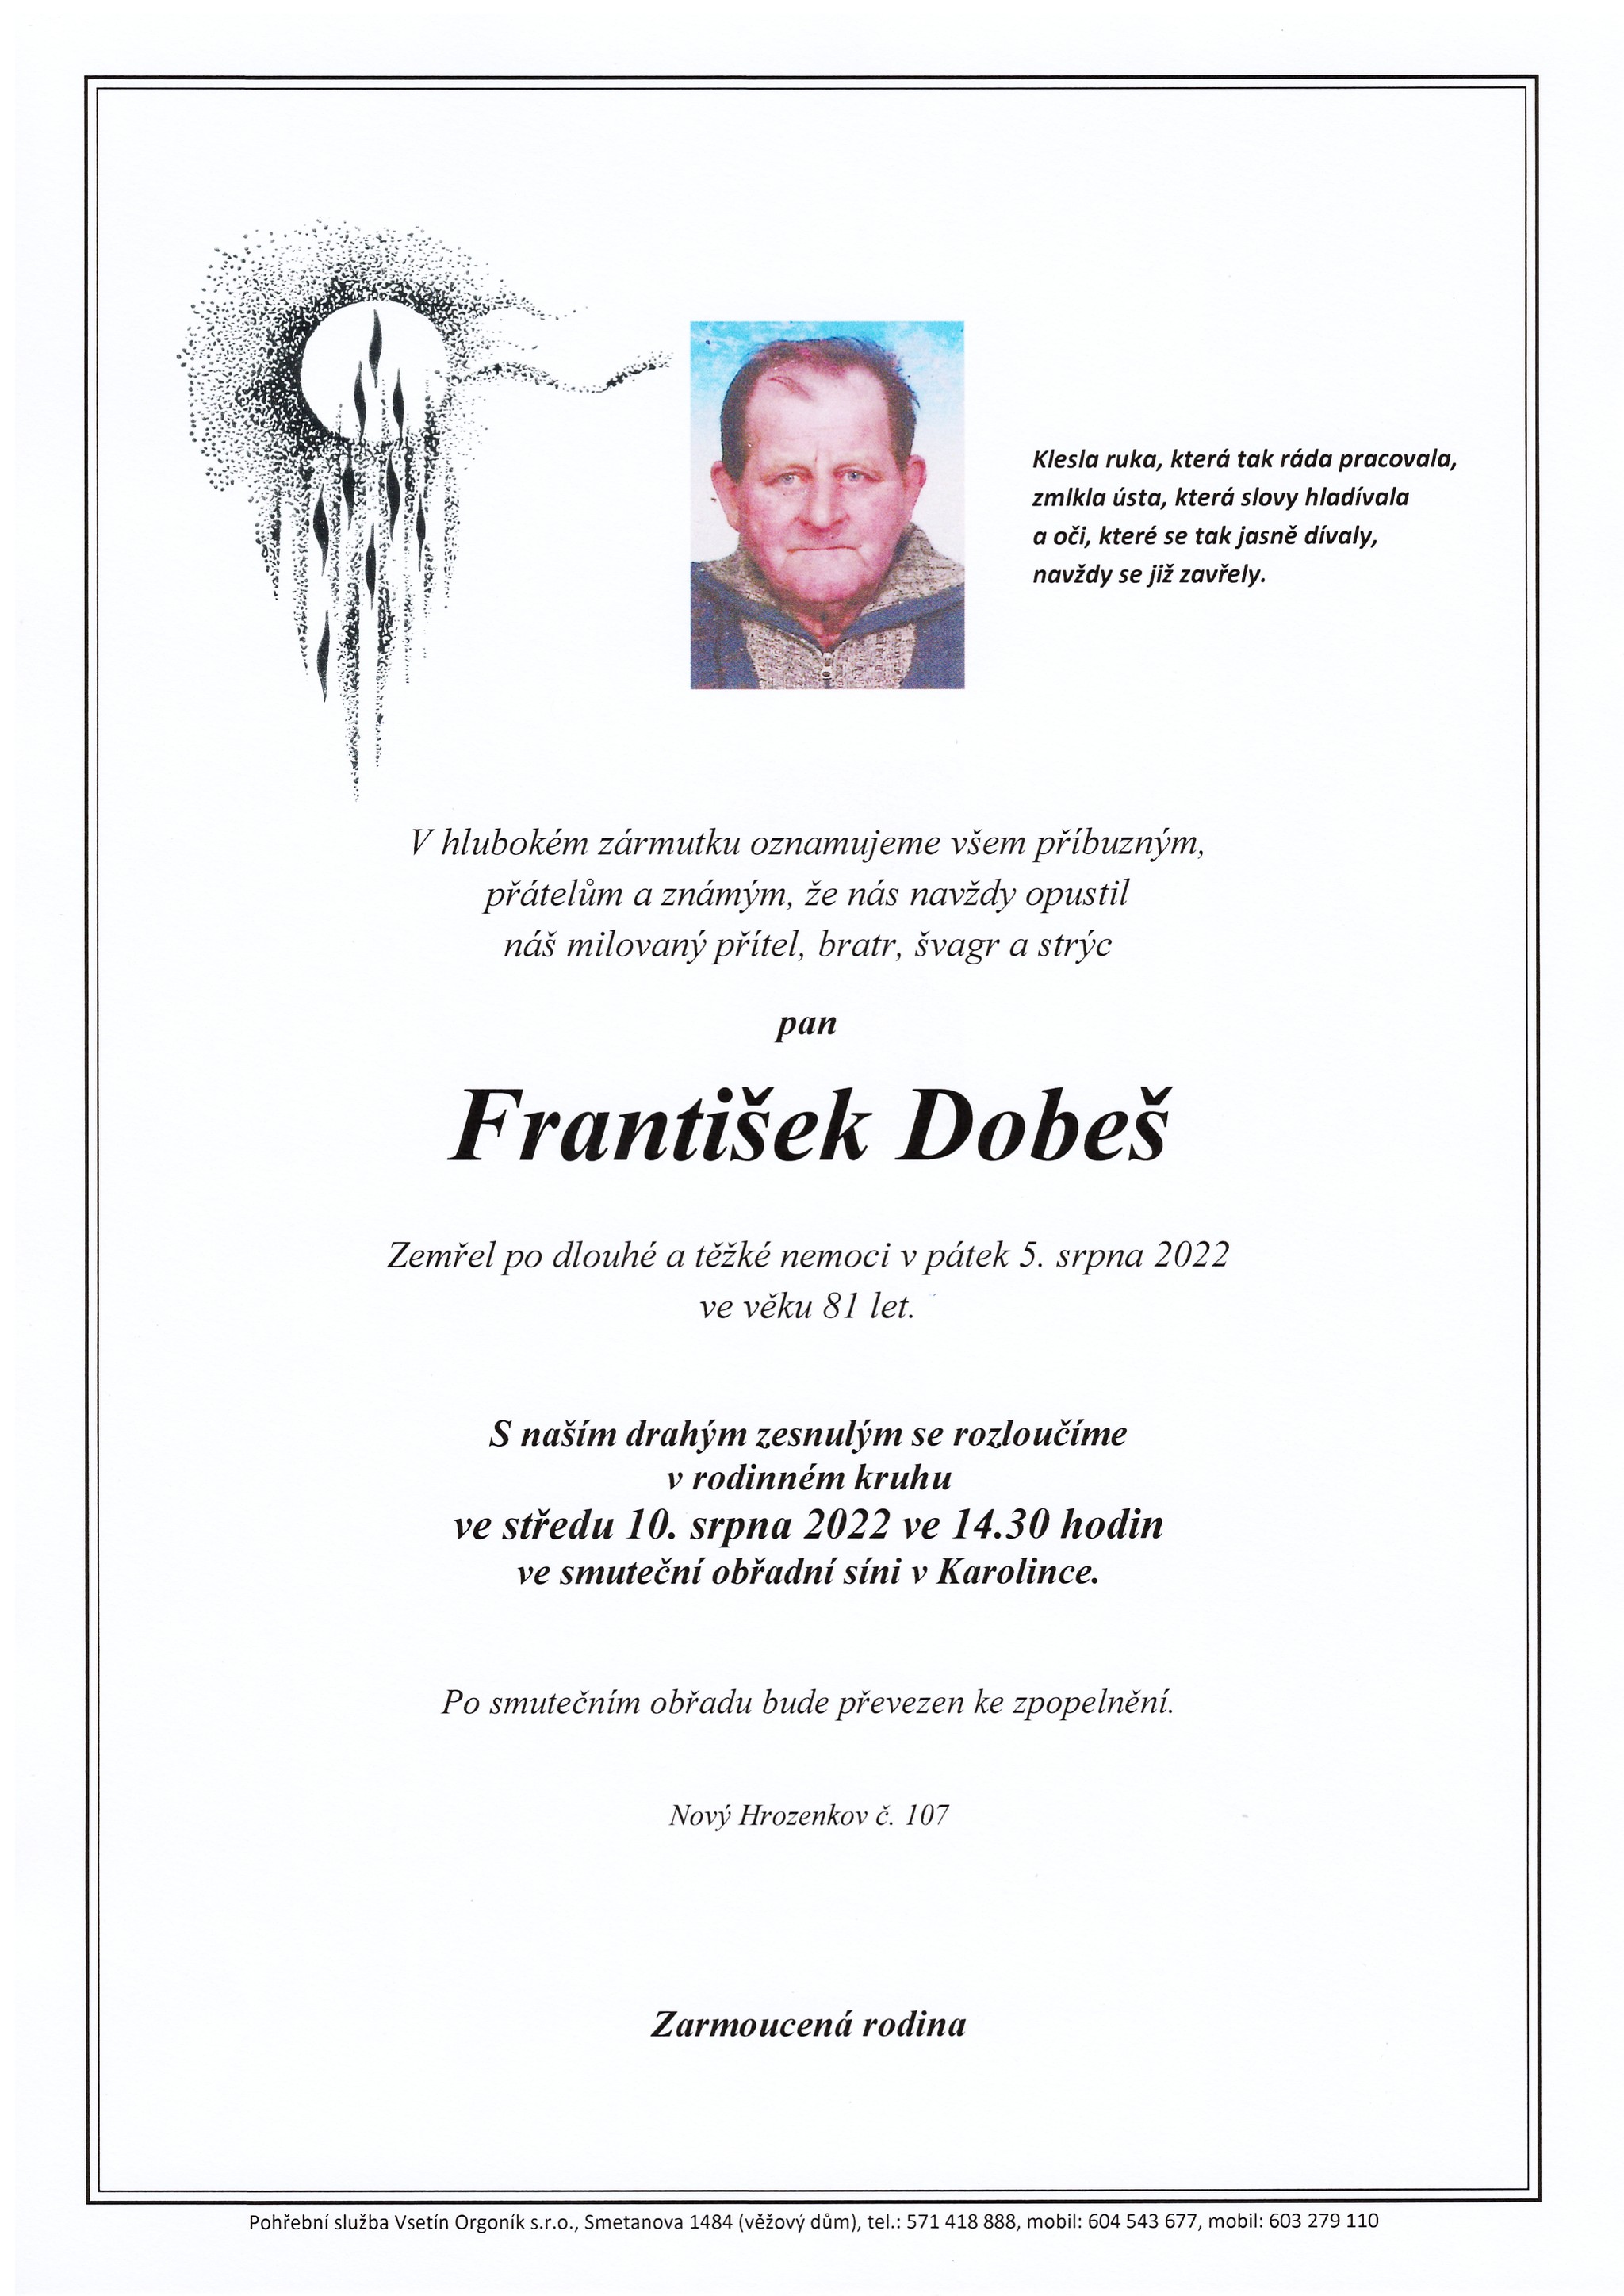 František Dobeš